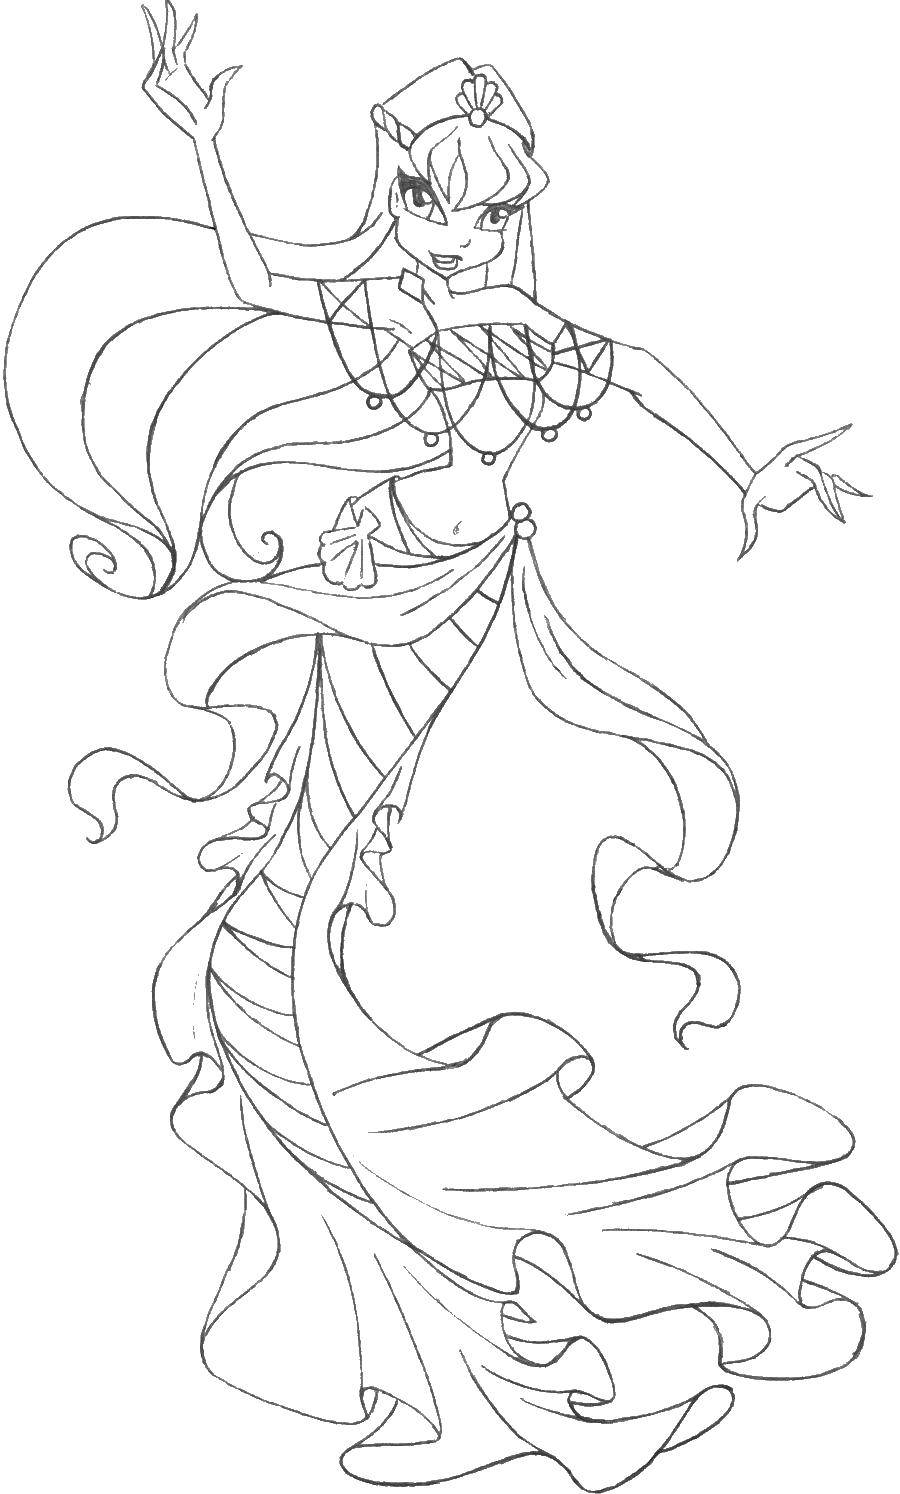 Название: Раскраска Стелла русалка. Категория: Винкс. Теги: Стелла, фея, крылья.